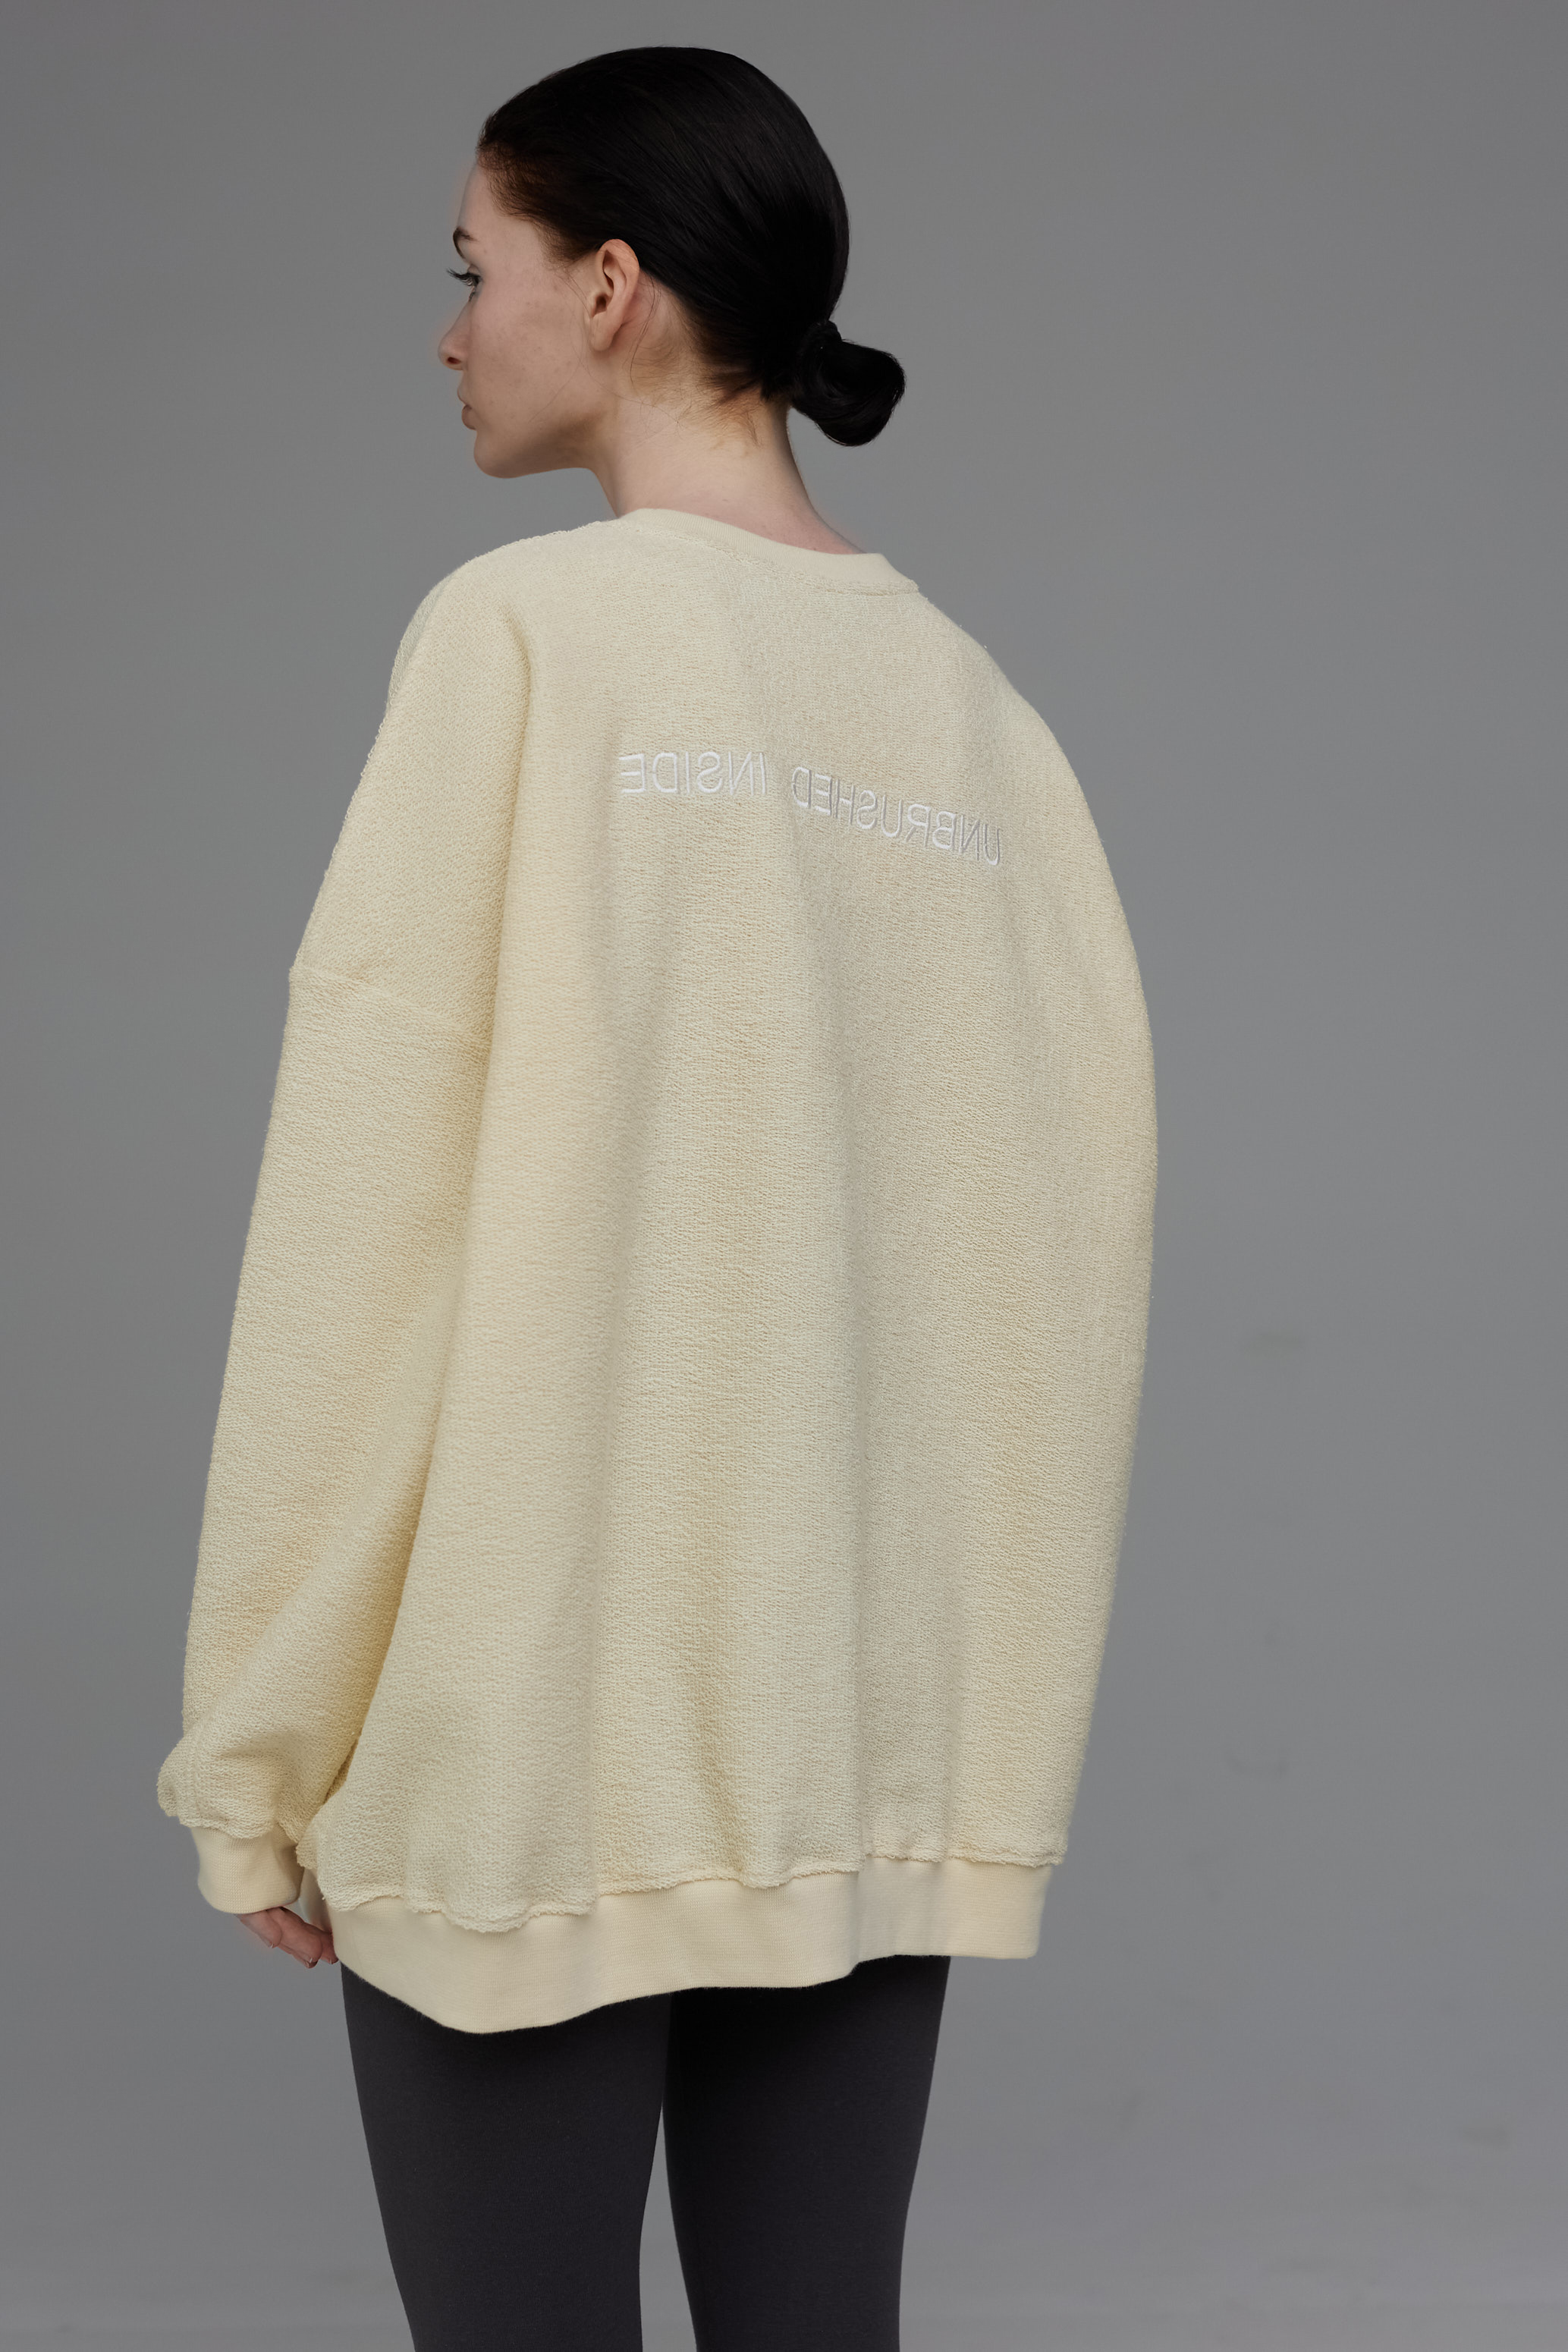 longsleeve crewneck sweatshirt "unbrushed" in vanilla color